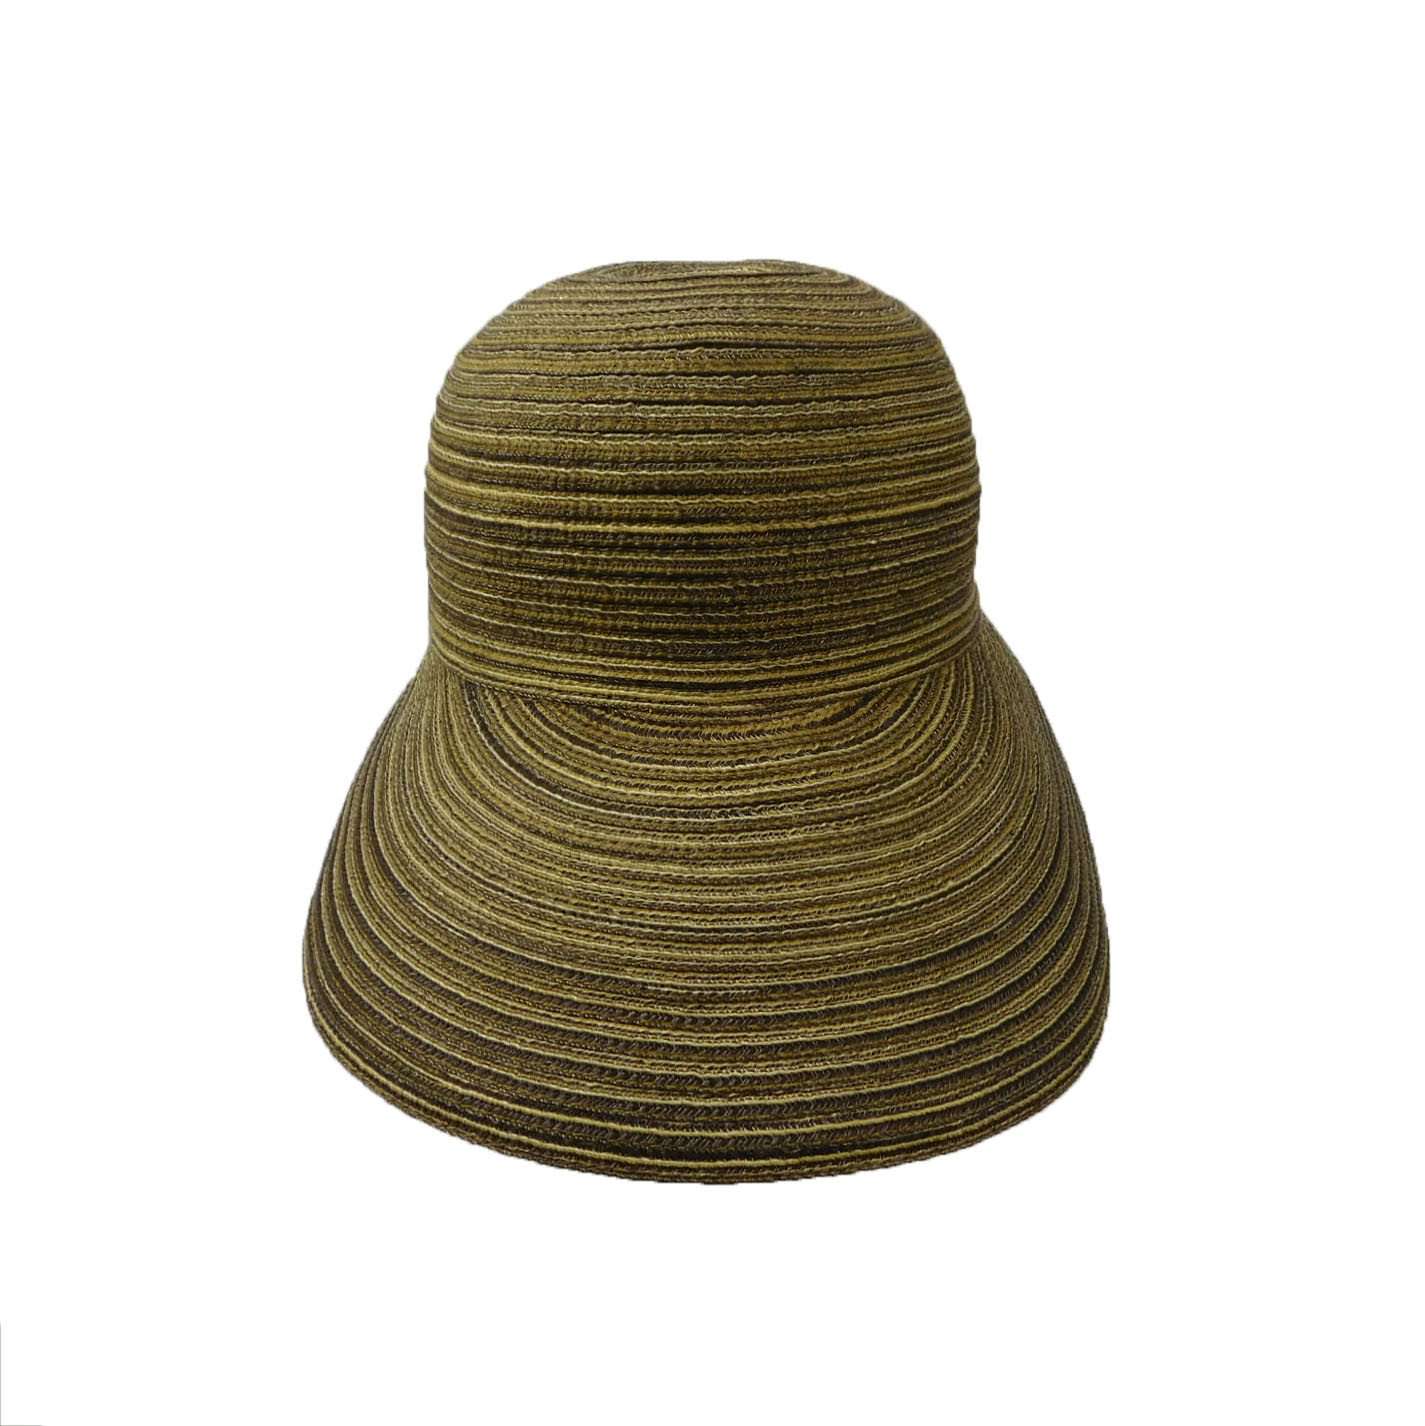 Big Bill Women's Facesaver Cap Cap Boardwalk Style Hats WSPS567BN Brown M/L (57 - 58 cm) 